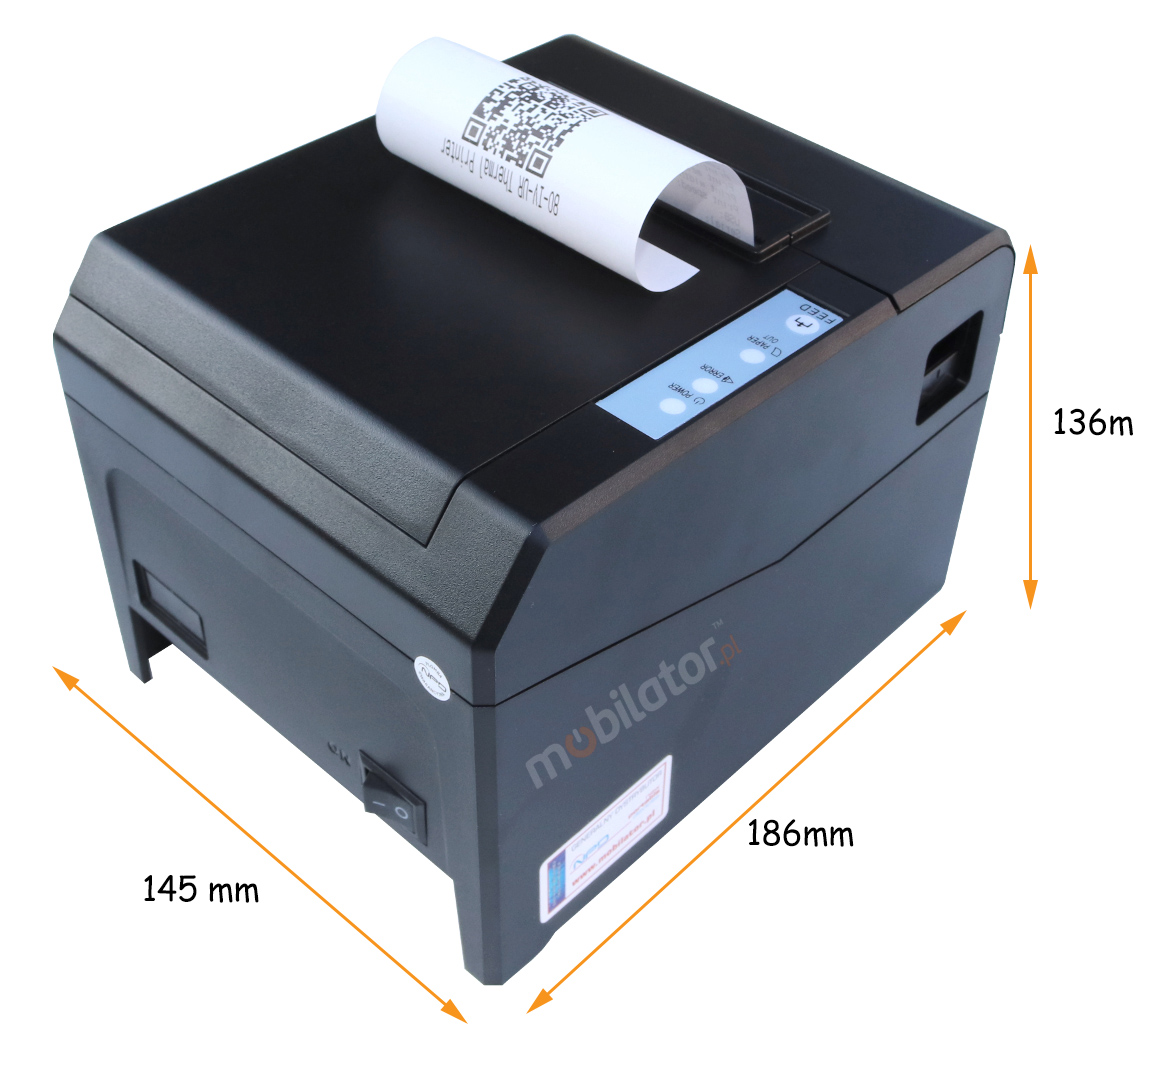 MobiPrint  CMX 8008 term printer mobilator new portable device